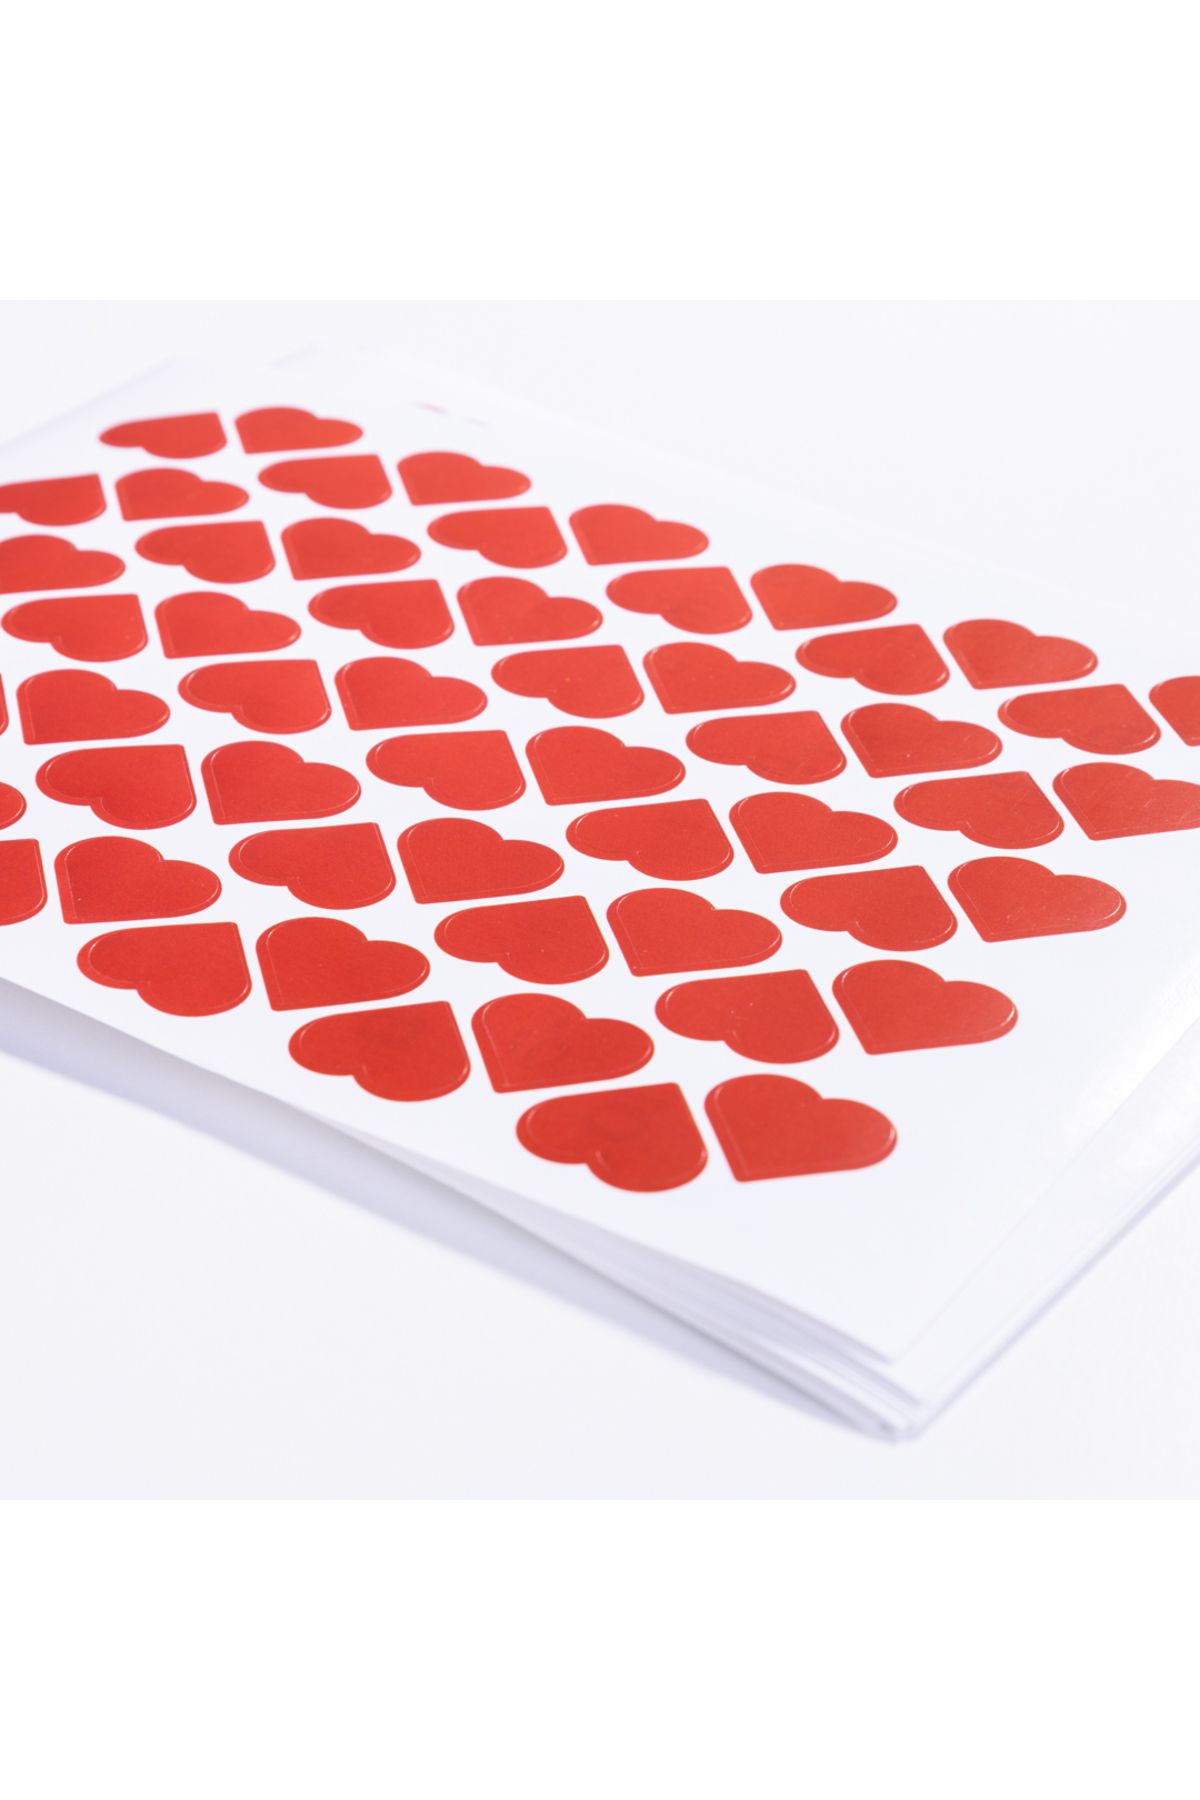 Bimotif Dikey şerit kalpli sticker seti, 1200 adet